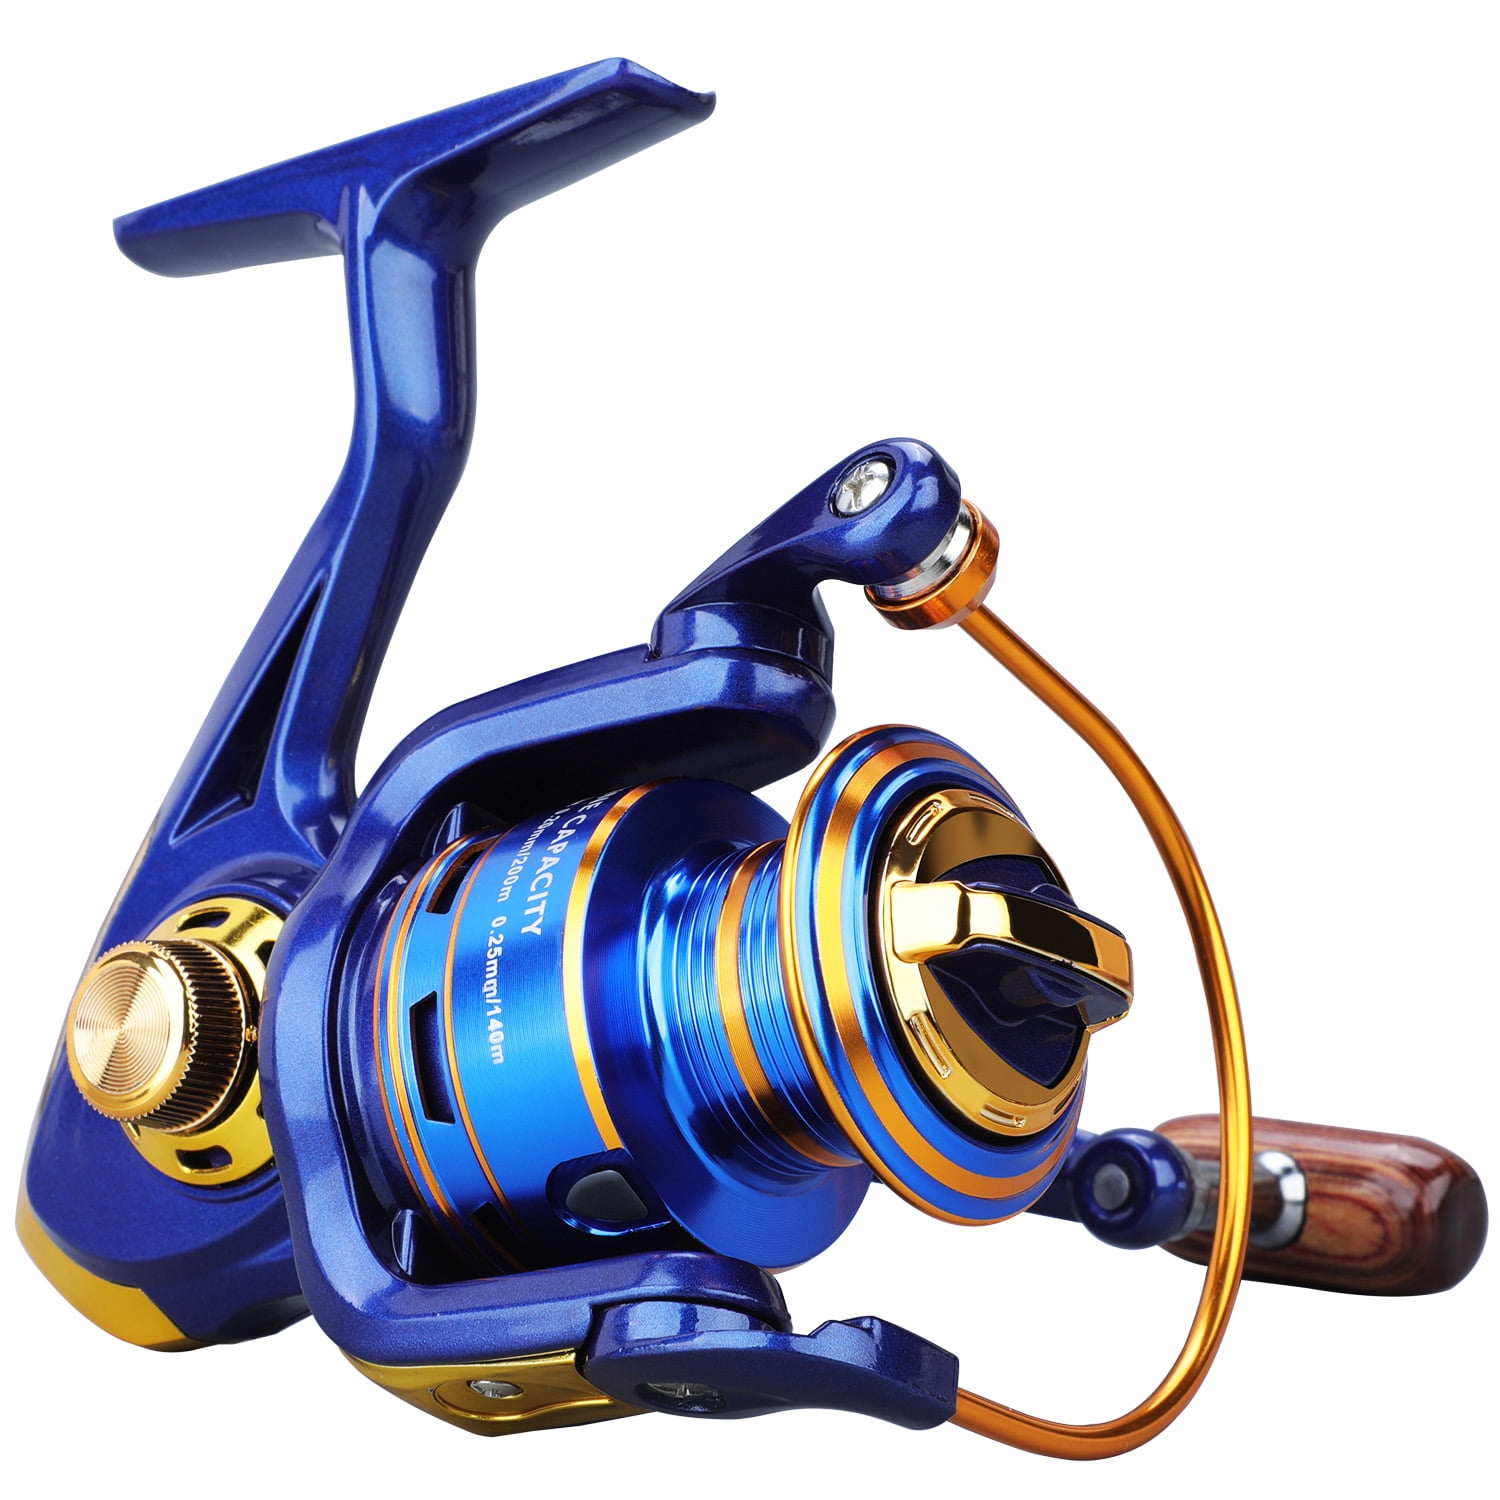 Sougayilang Spinning Fishing Reel 1000-4000 Max Drag 10kg with Spare Metal Spool  Reel Saltwater Freshwater for Carp Wheel Pesca